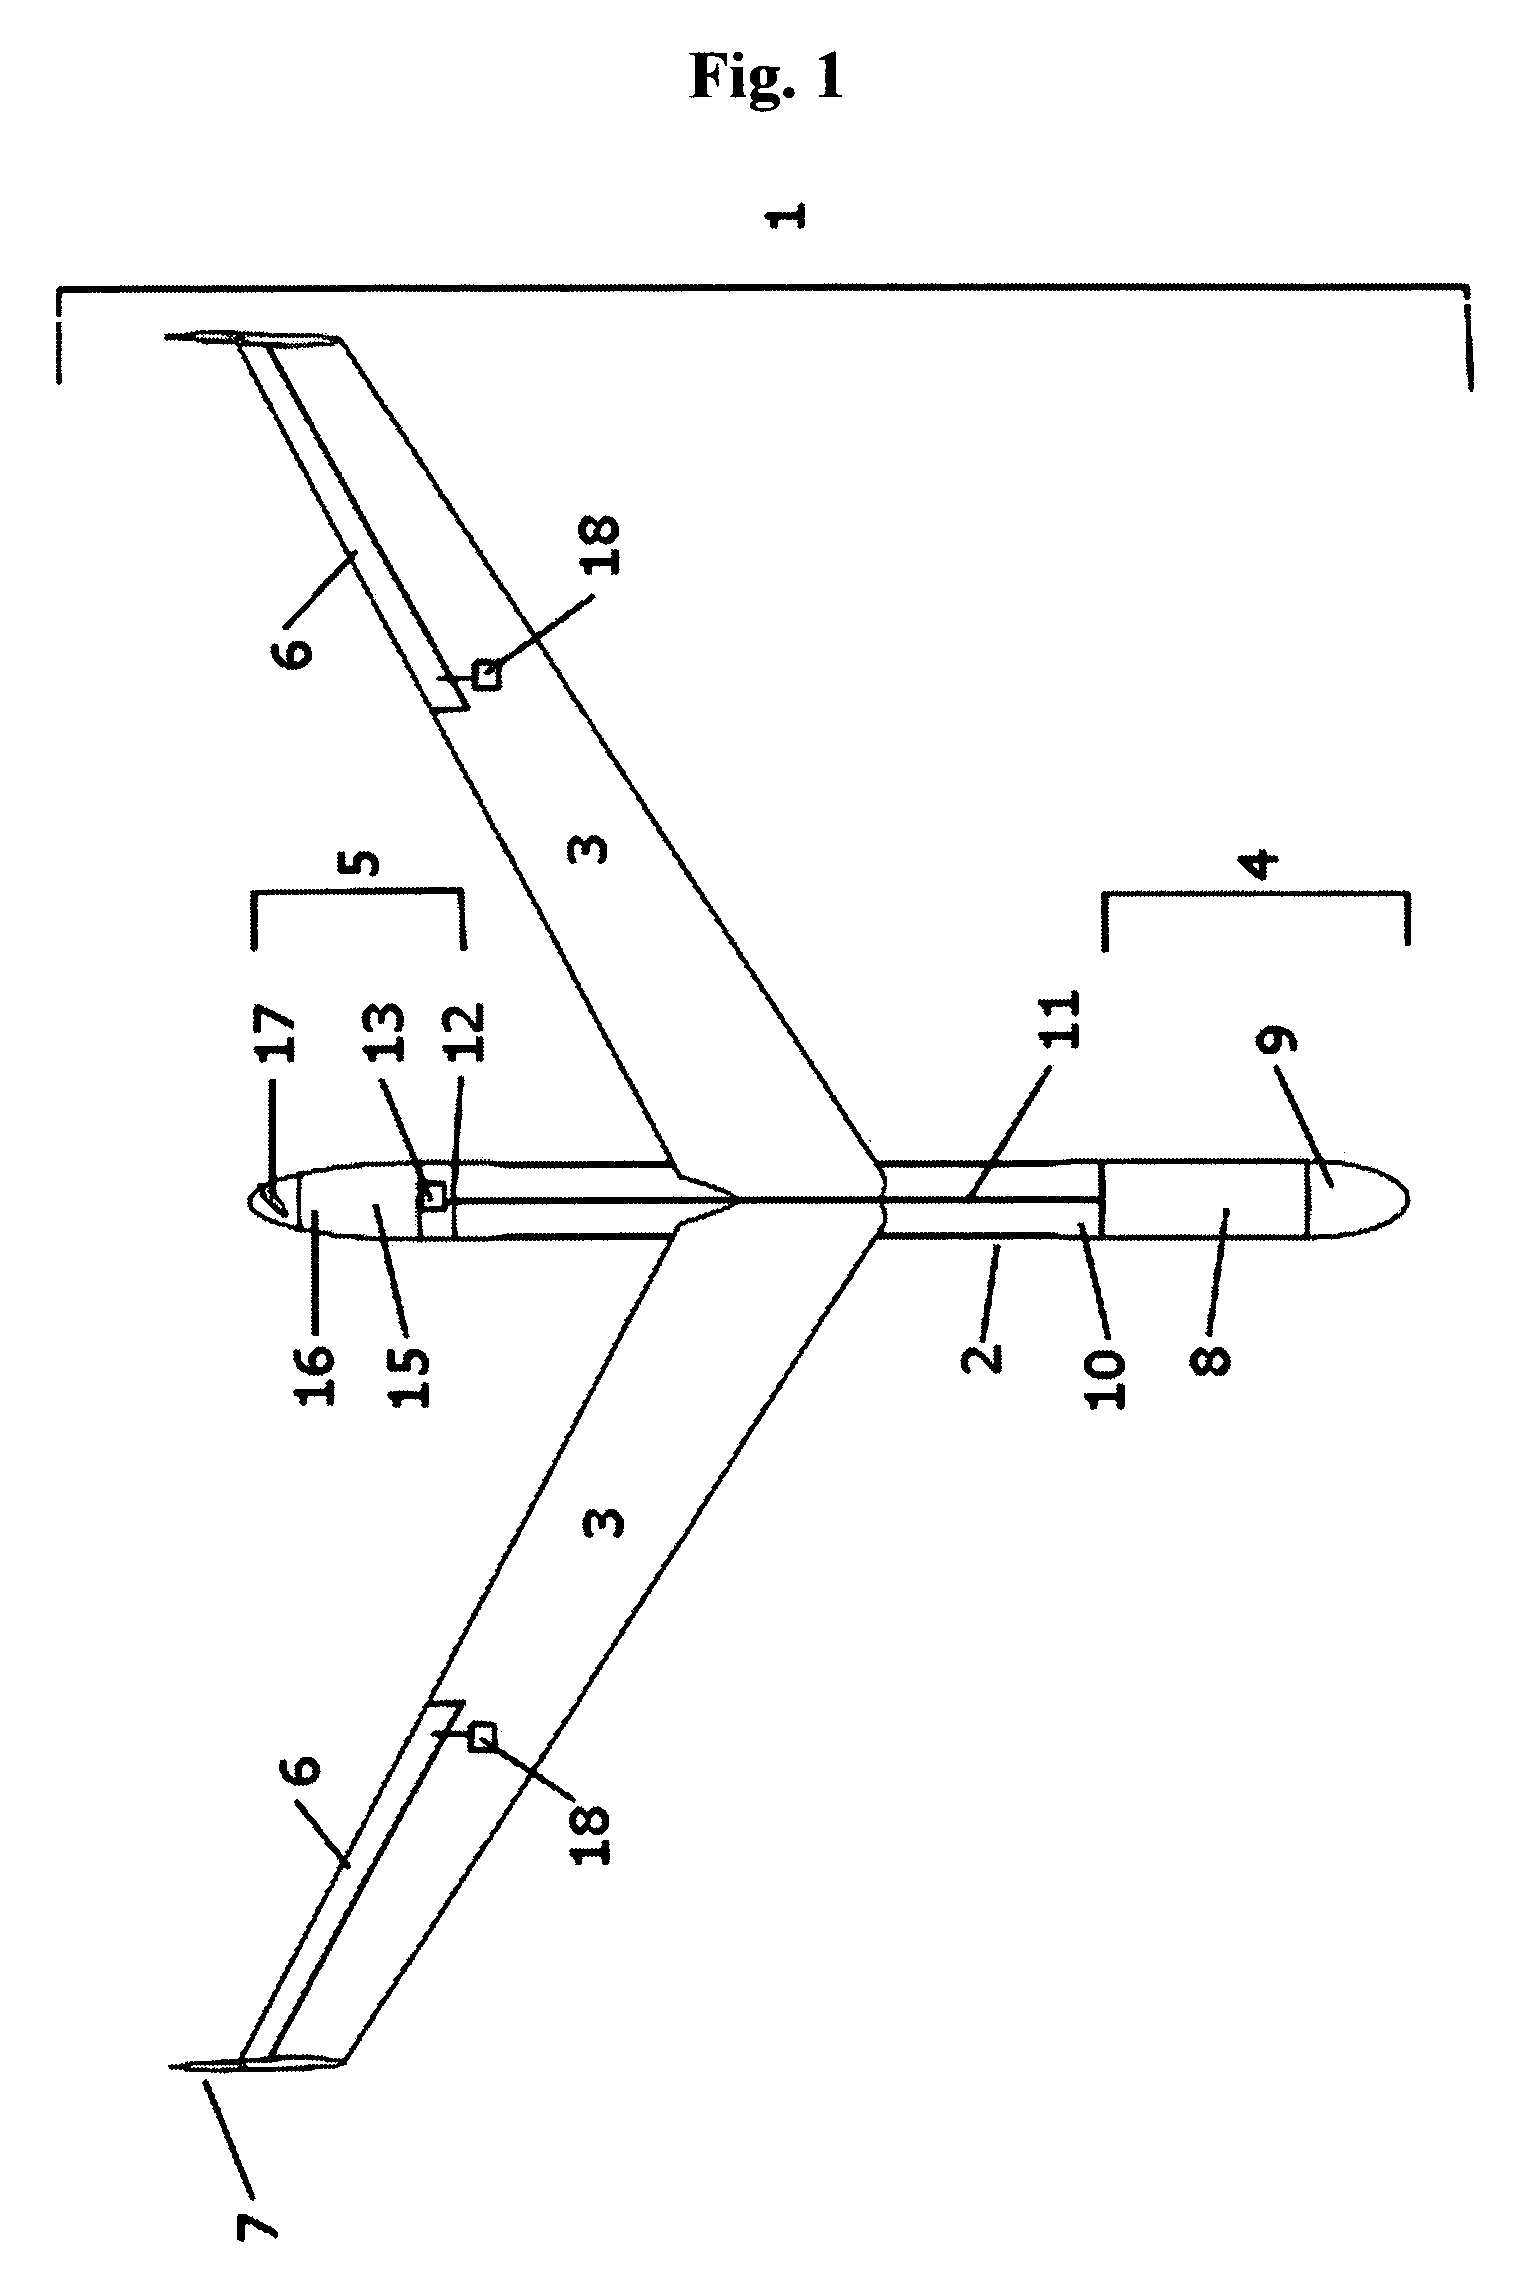 Expendable sonobuoy flight kit with aerodynamically assisted sonobuoy separation